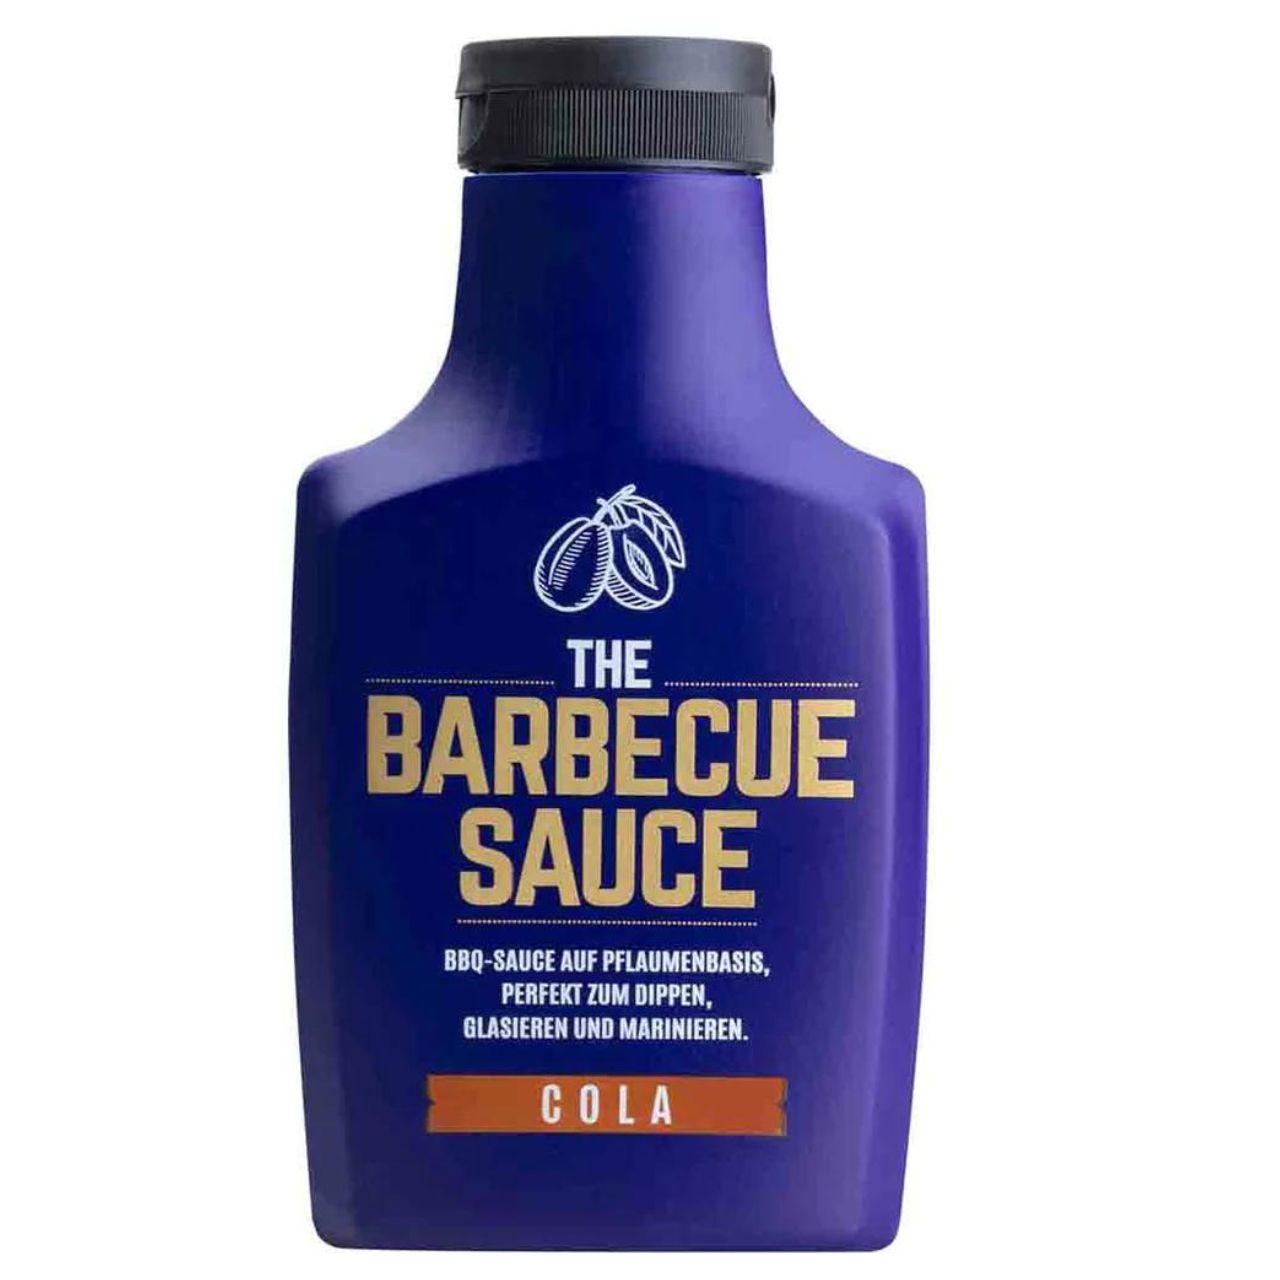 The Barbecue Sauce - Cola- BBQ Sauce auf Pflaumenbasis